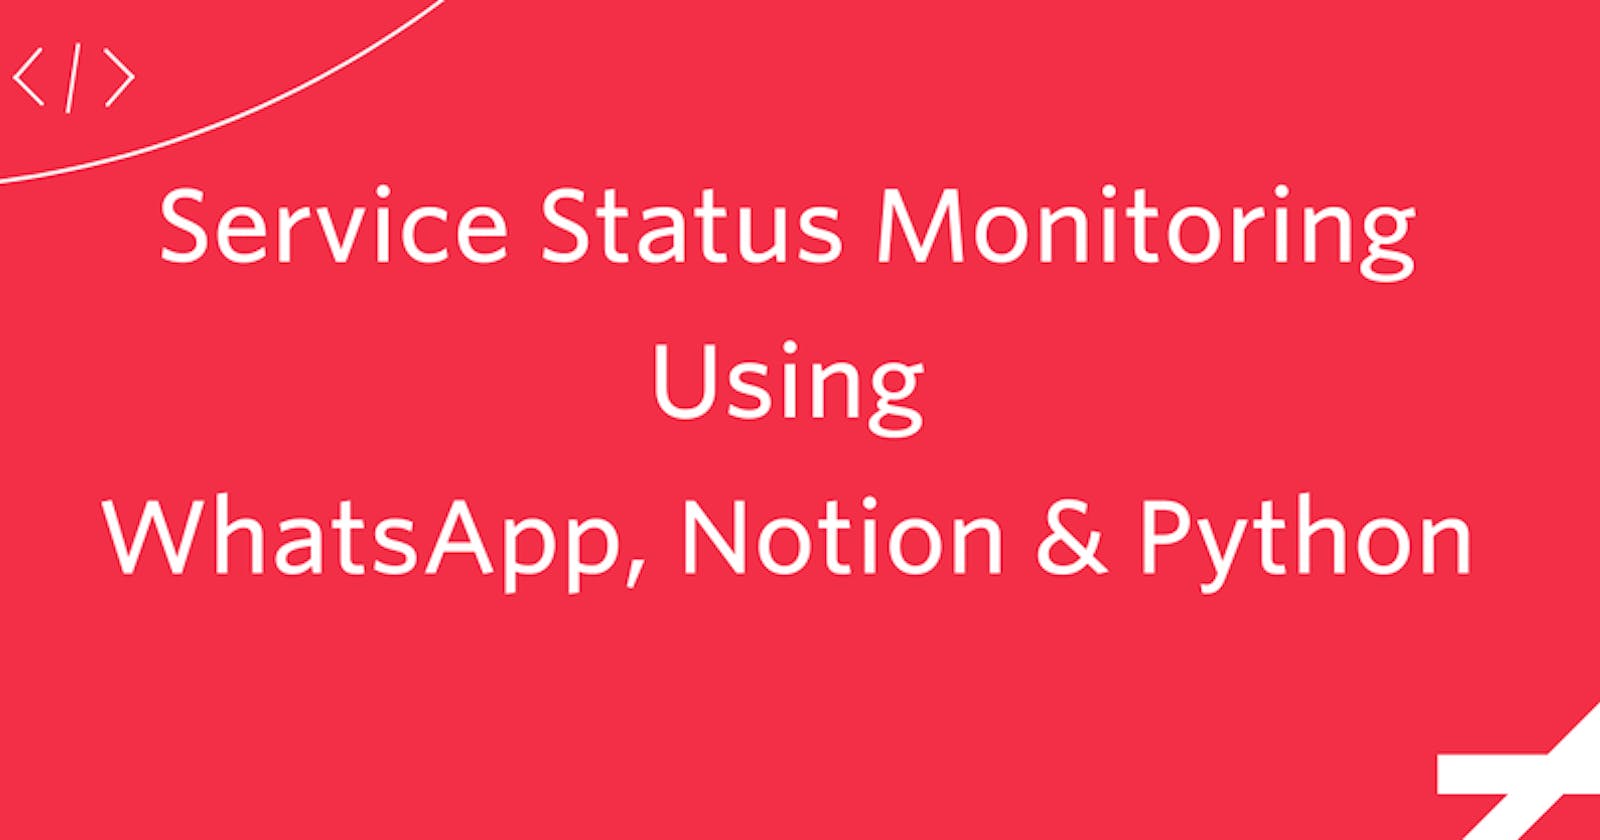 Service Status Monitoring Using WhatsApp, Notion, and Python